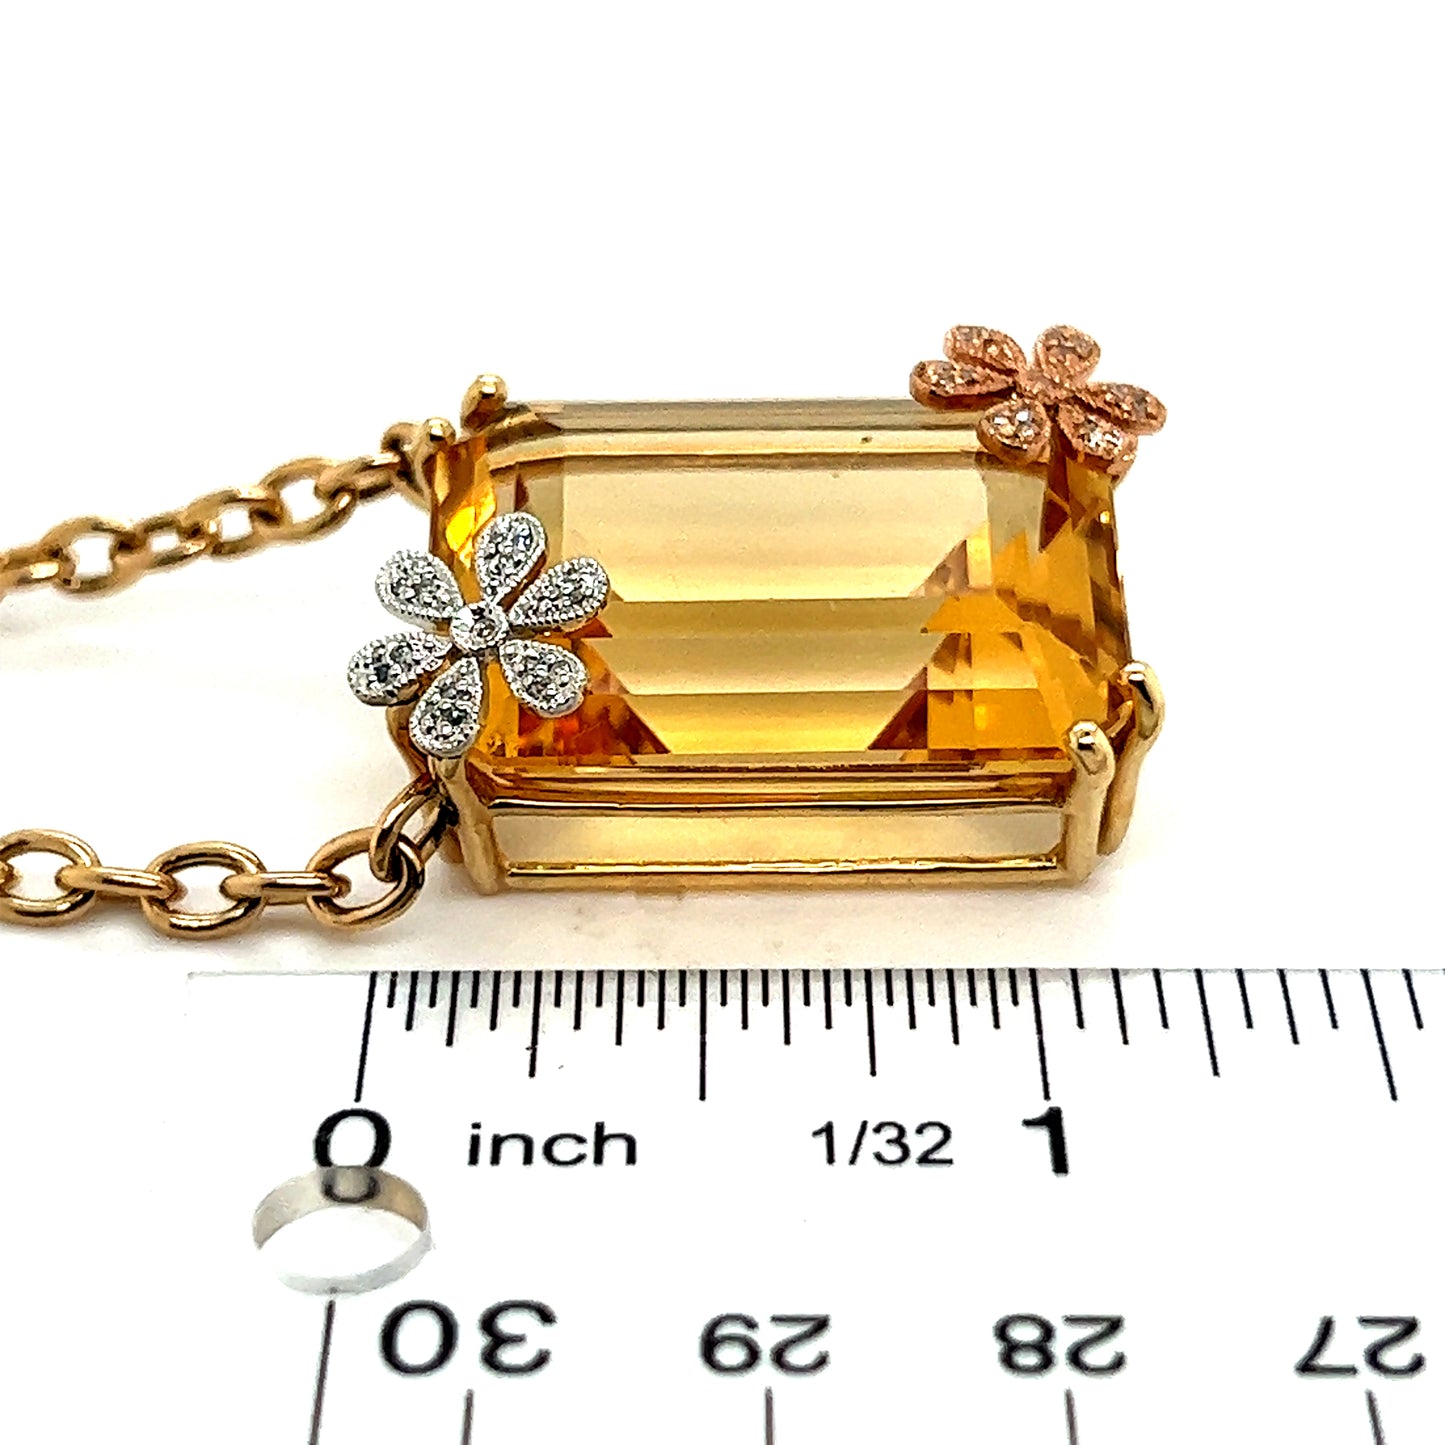 Diamond Citrine Necklace 14k Gold 25.12 TCW Women Certified $3,950 915314